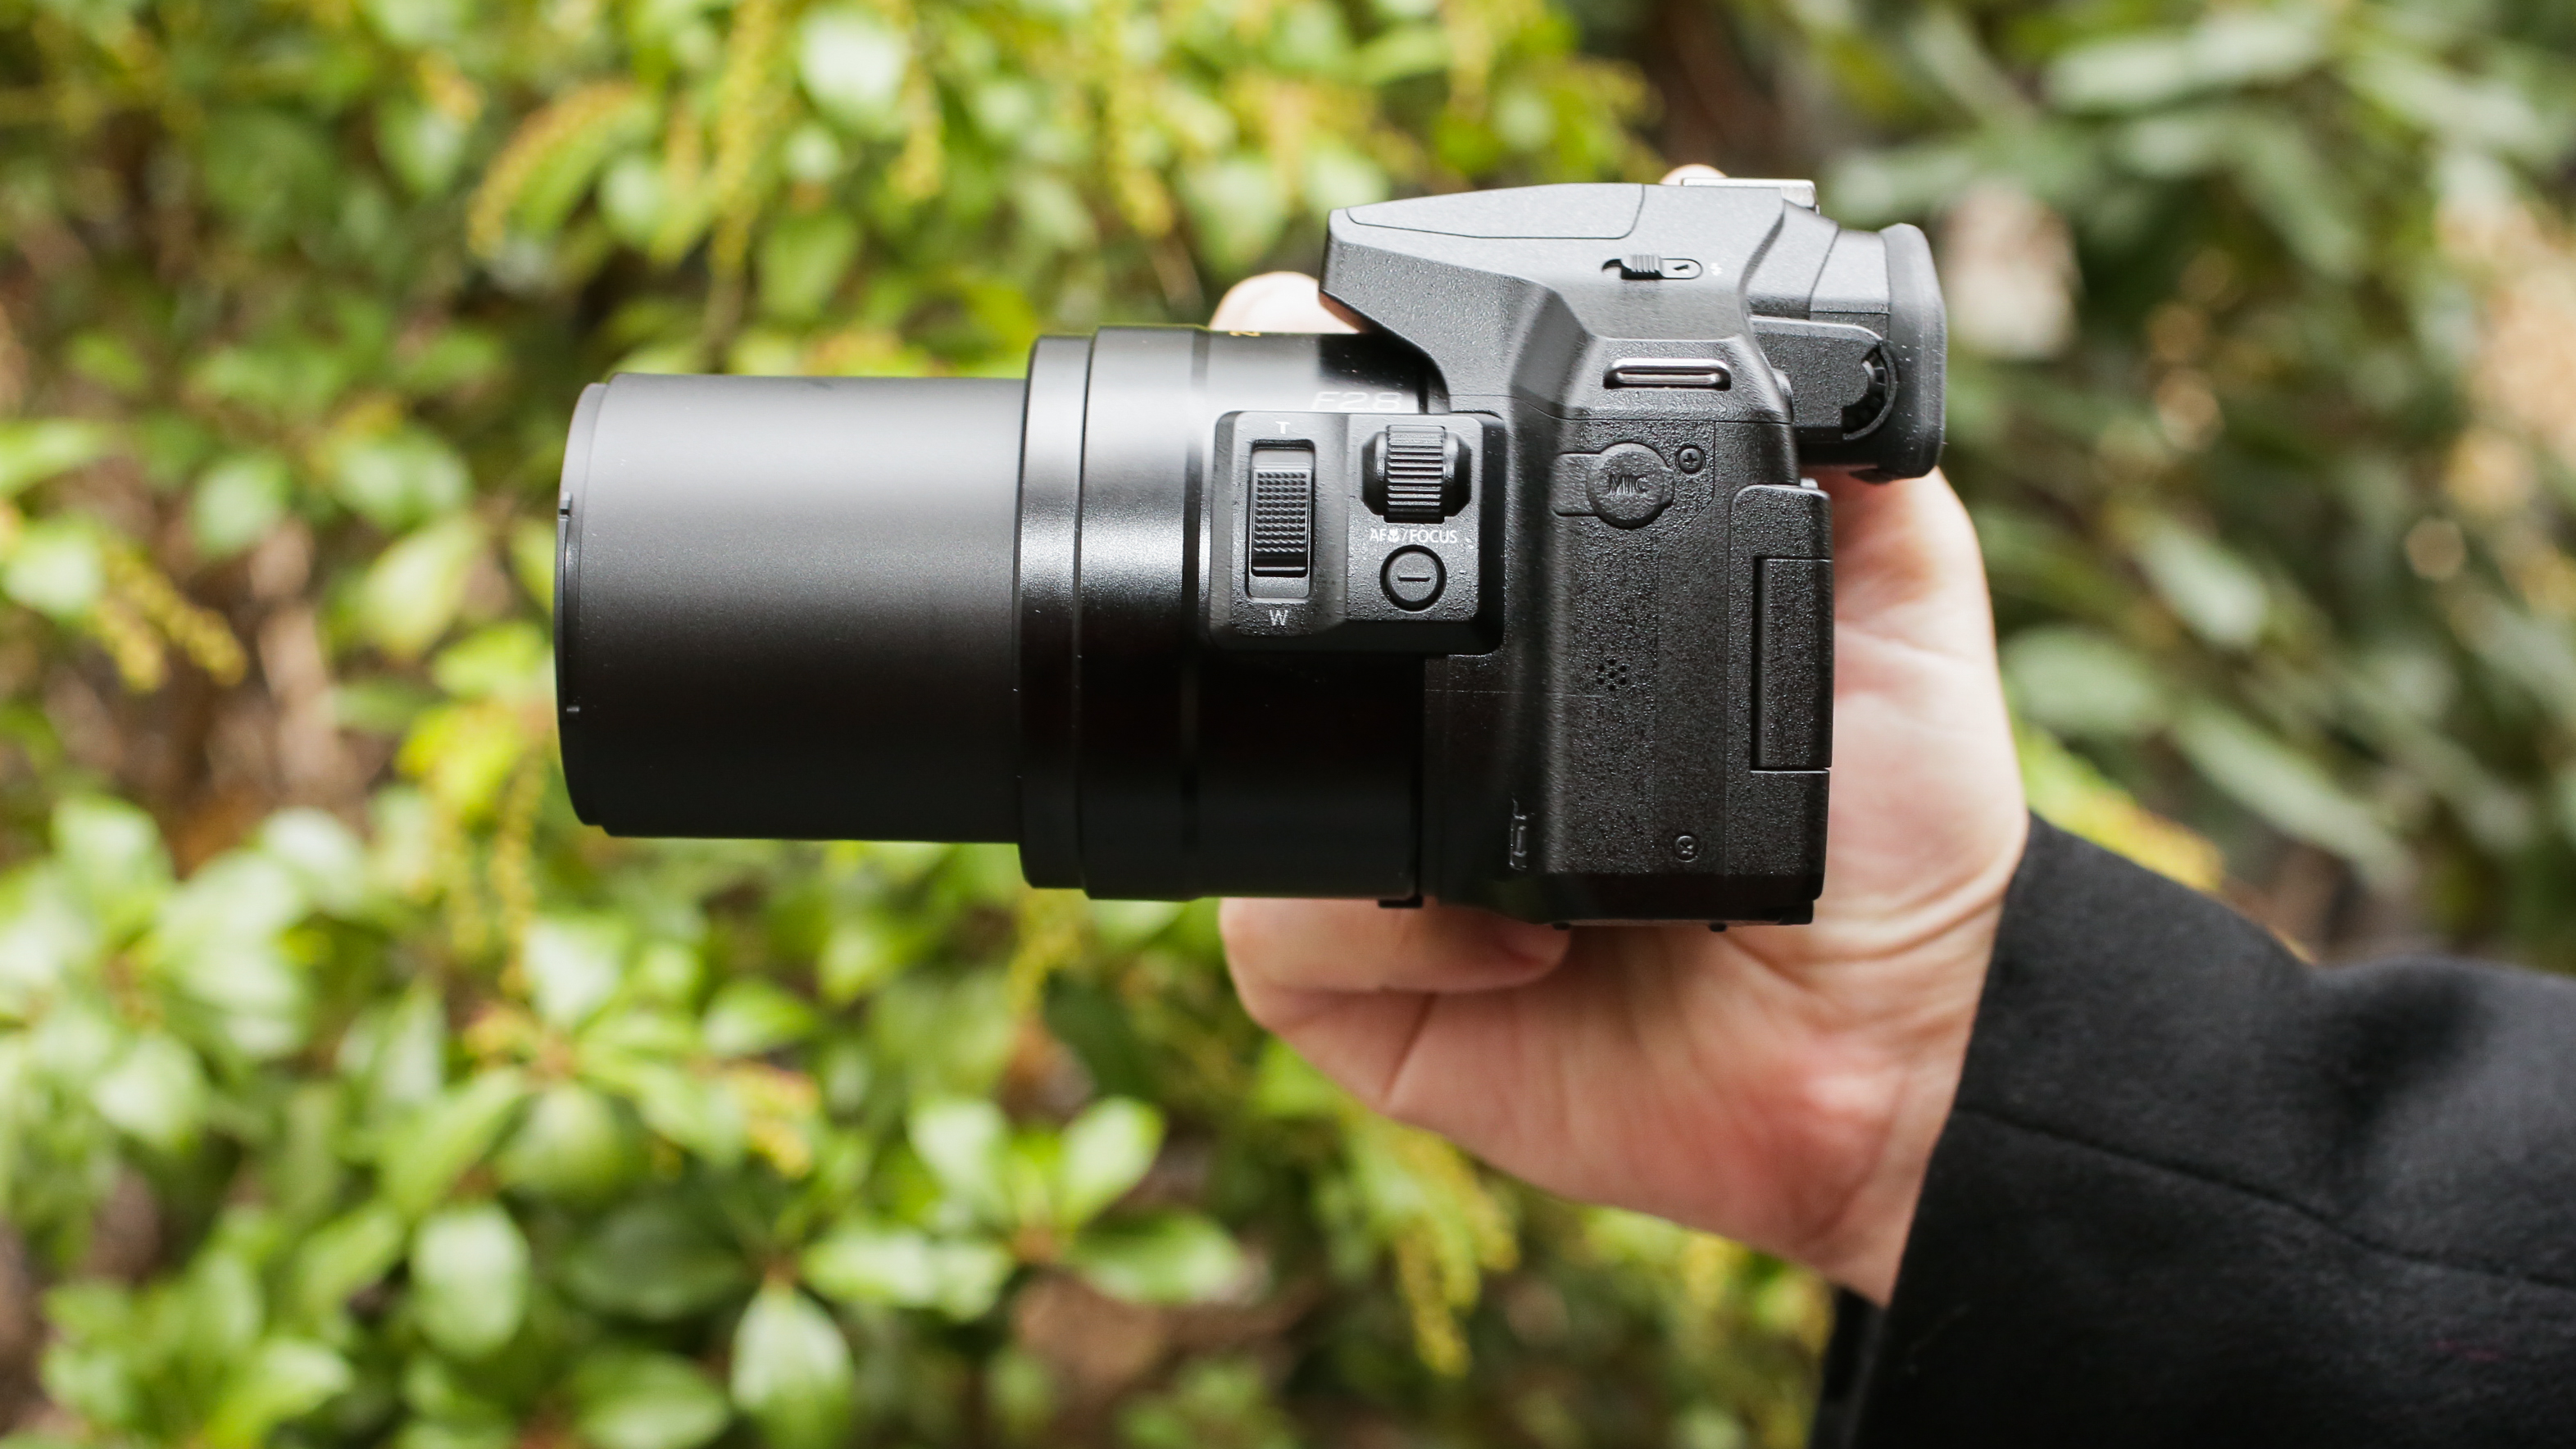 Panasonic Lumix DMC-FZ300 review: A killer lens backed by 